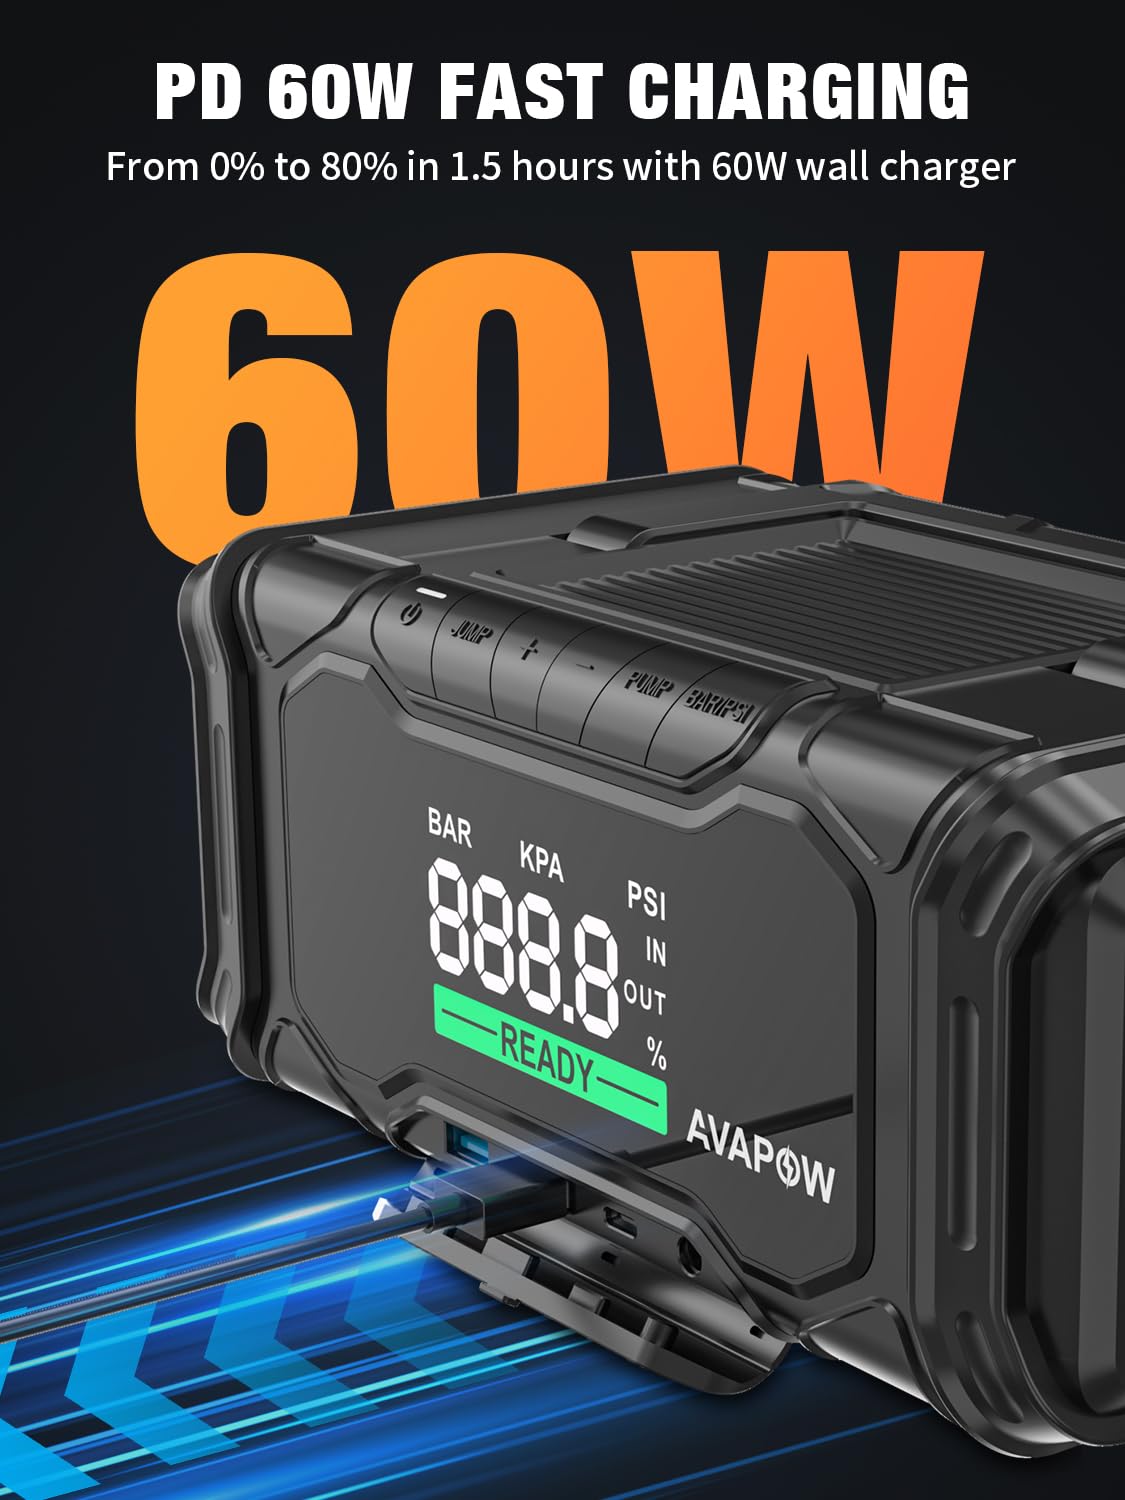 AVAPOW Car Battery Jump Starter 3000A Peak with Air Compressor, 12V 15